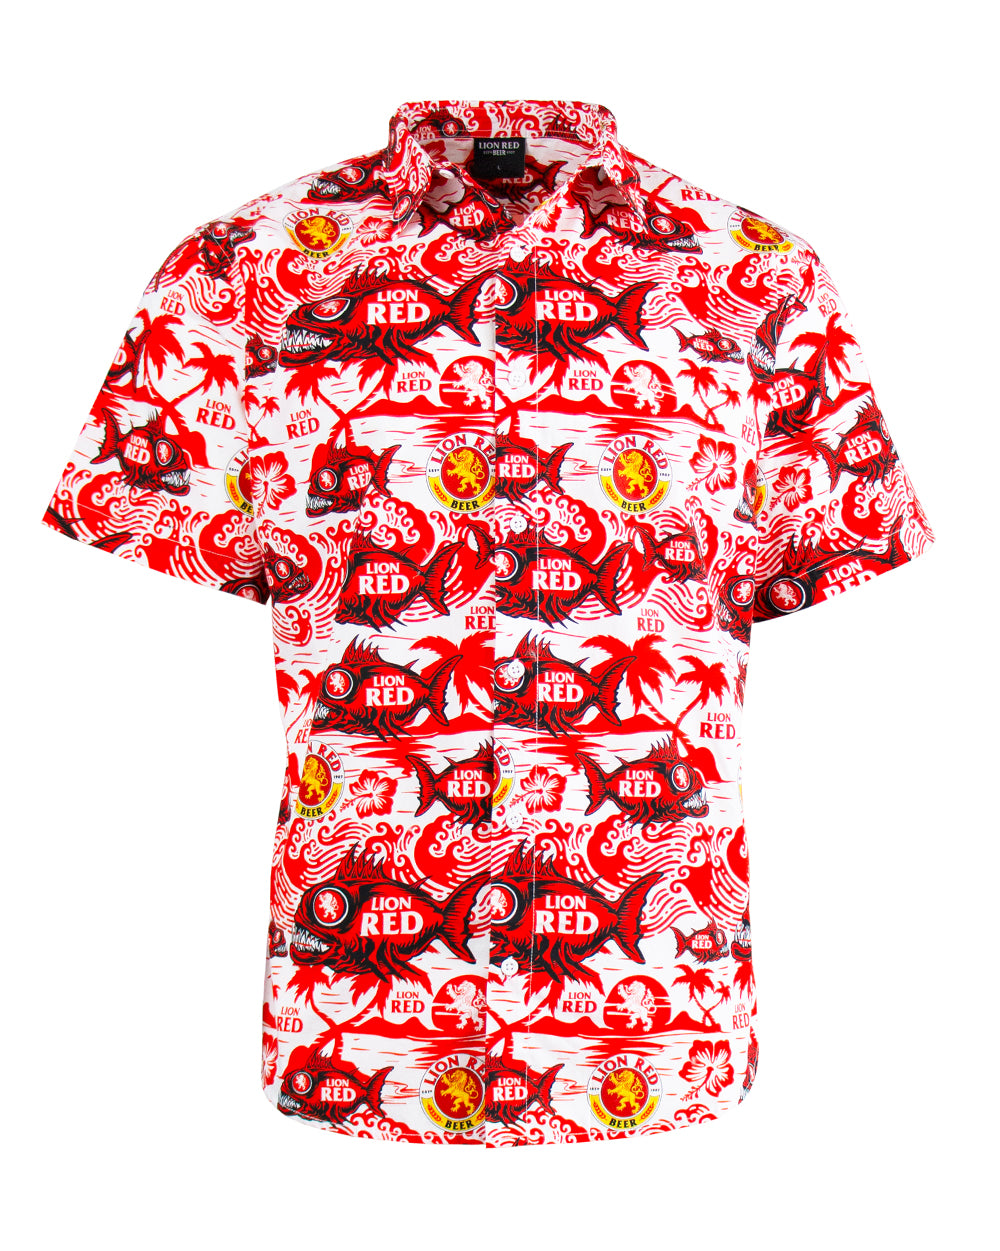 Lion Red Hawaiian Shirt -  Beer Gear Apparel & Merchandise - Speights - Lion Red - VB - Tokyo Dy merch